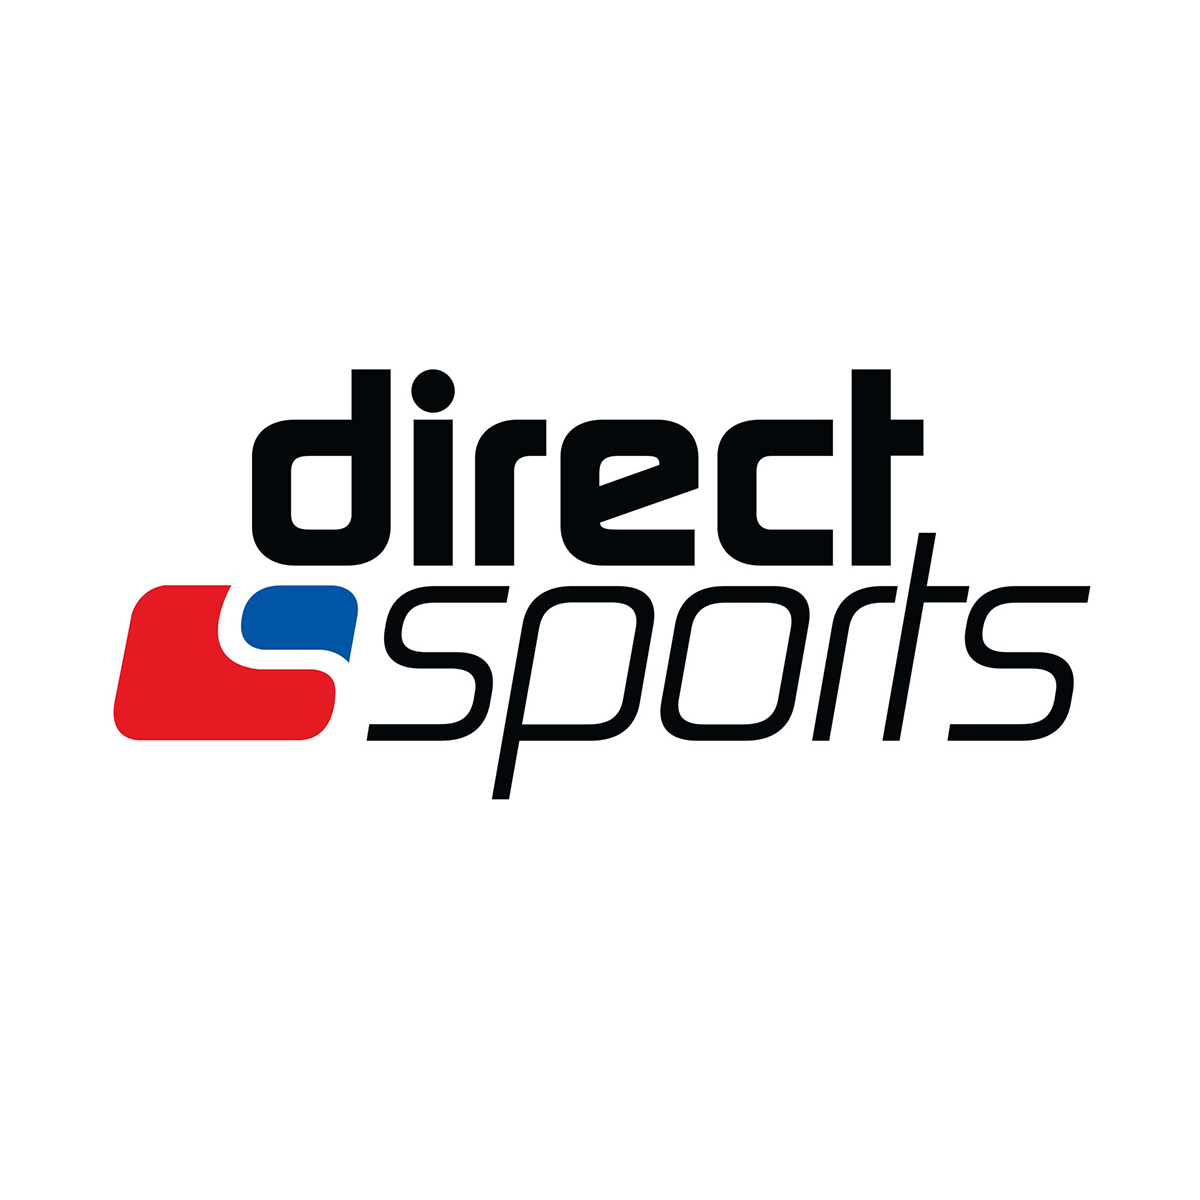 Direct Sports